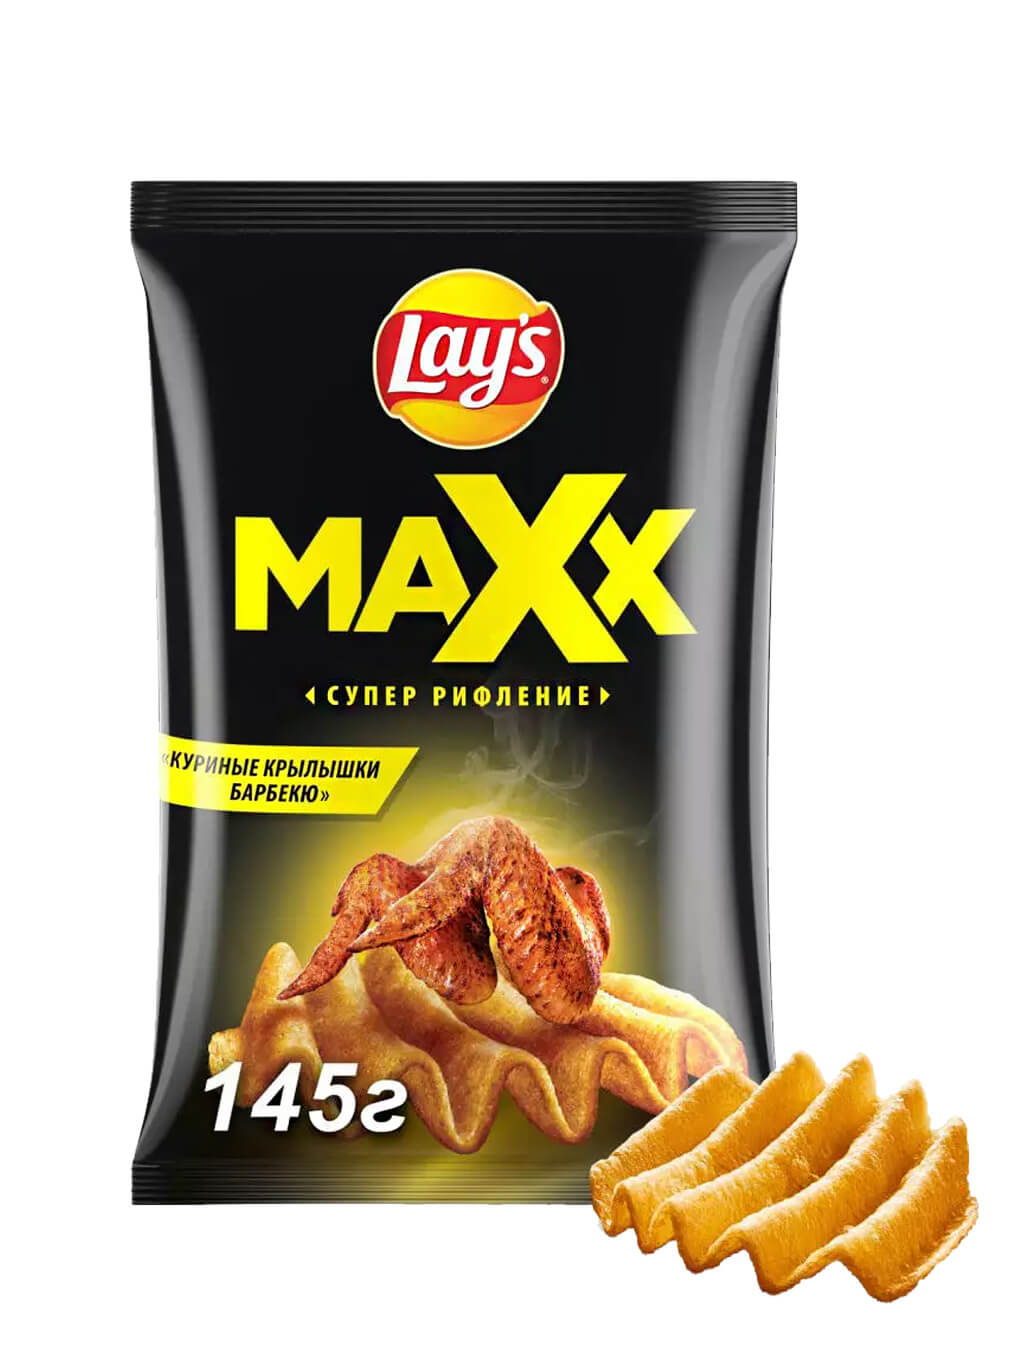 картинка Лэйс Lay's Maxx Супер рифление чипсы картофельные Куриные крылышки барбекю 145 гр